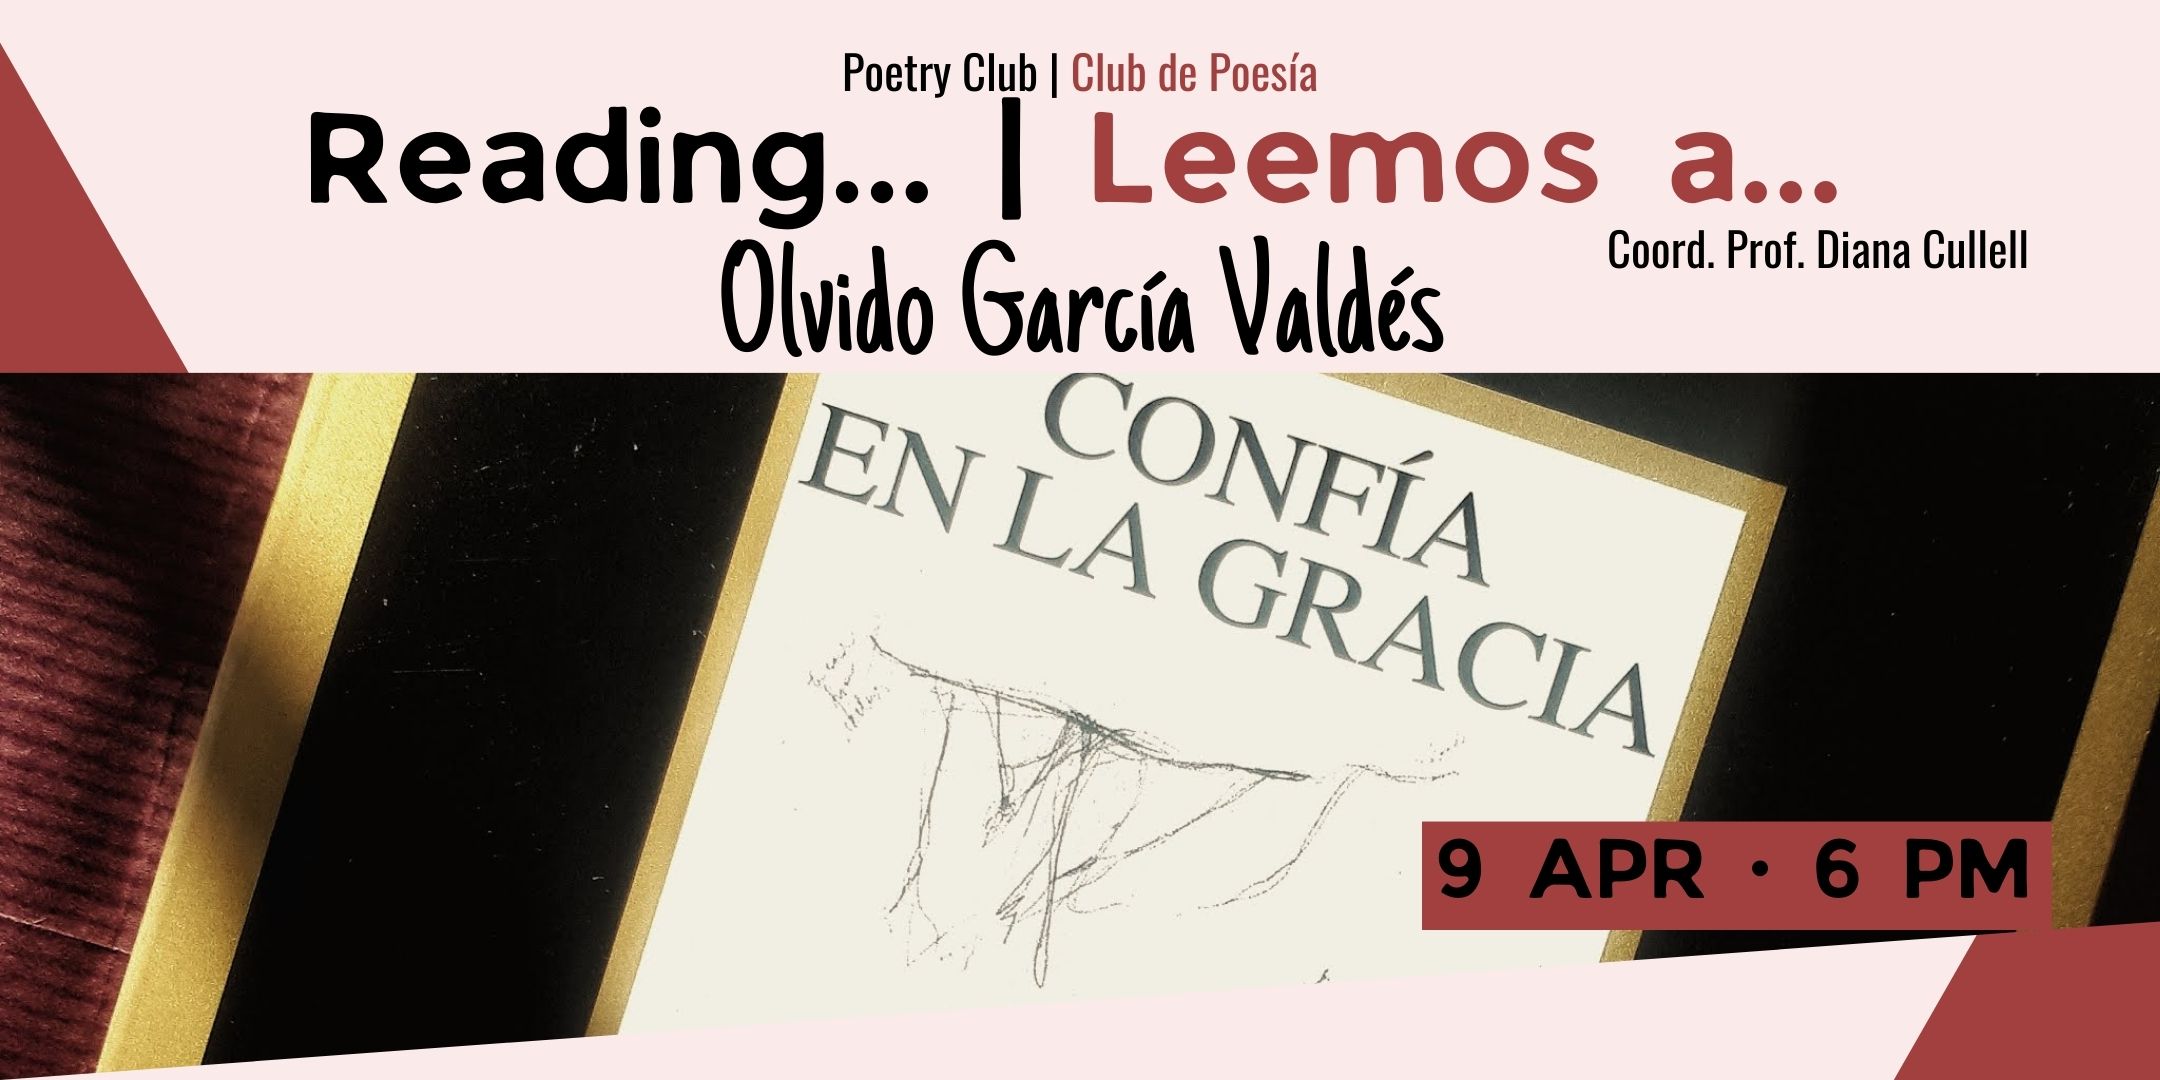 Reading... Olvido García Valdés